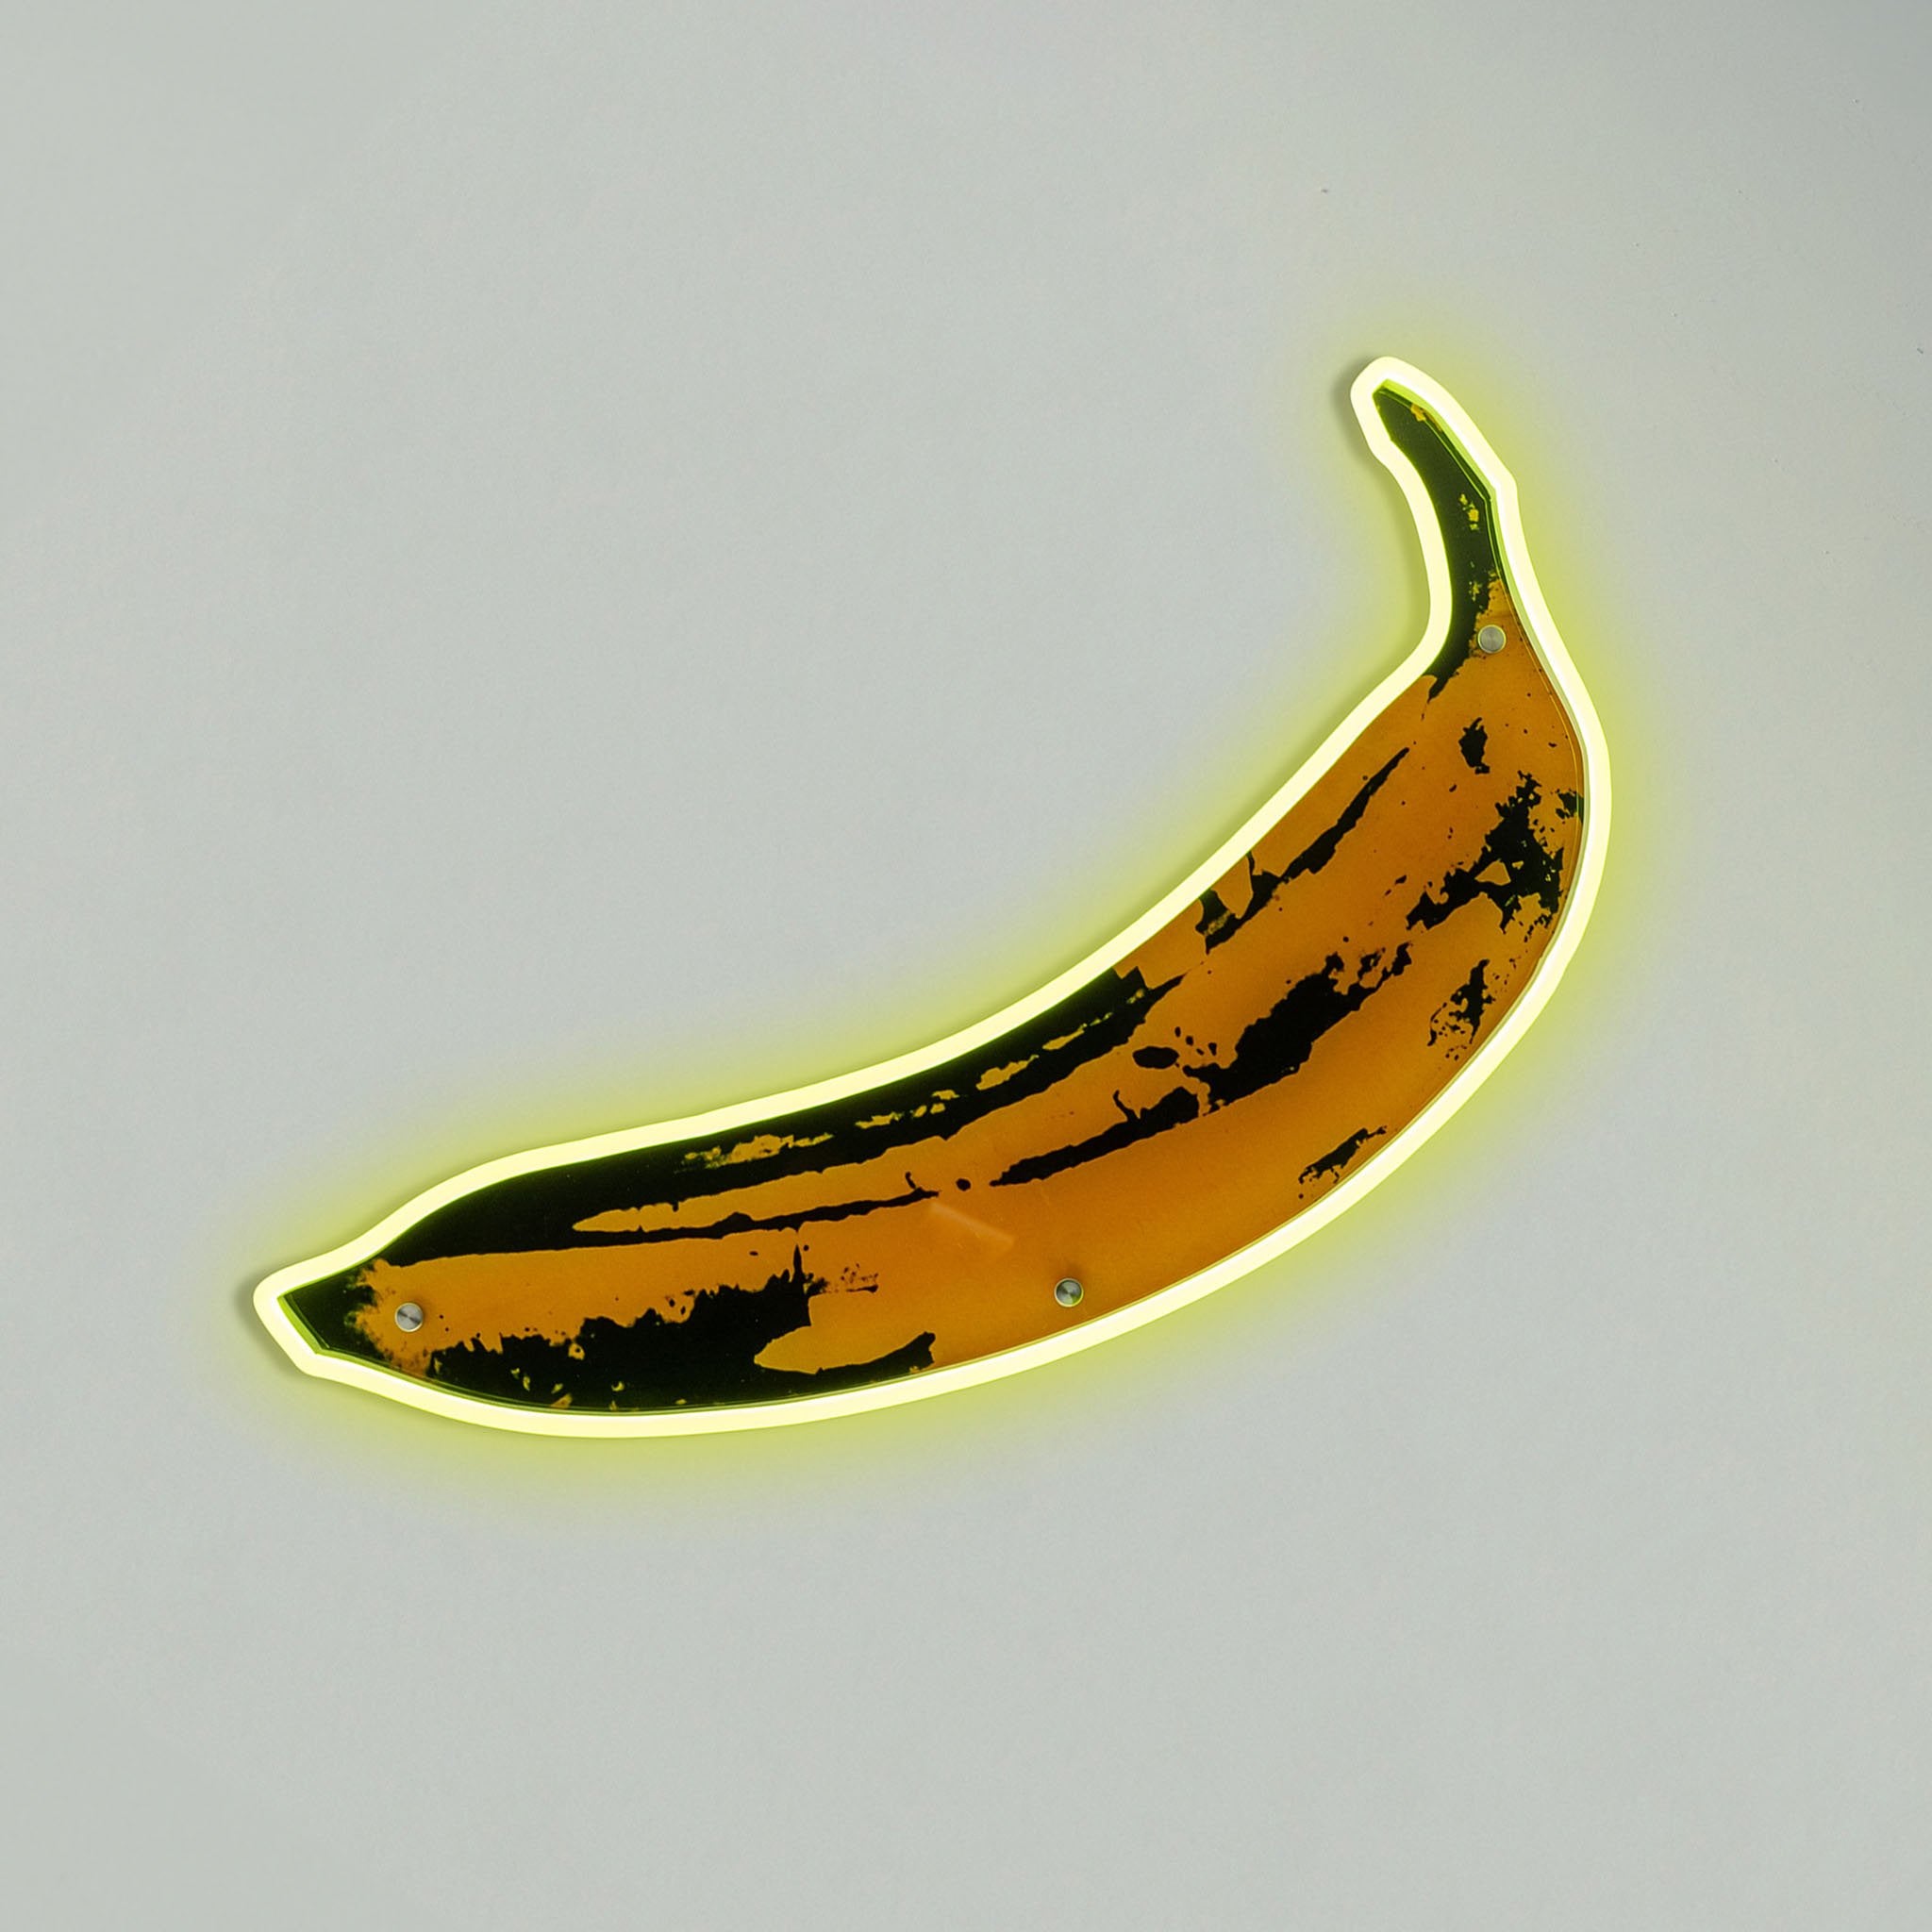 Banana by Andy Warhol - LED Neon Sign